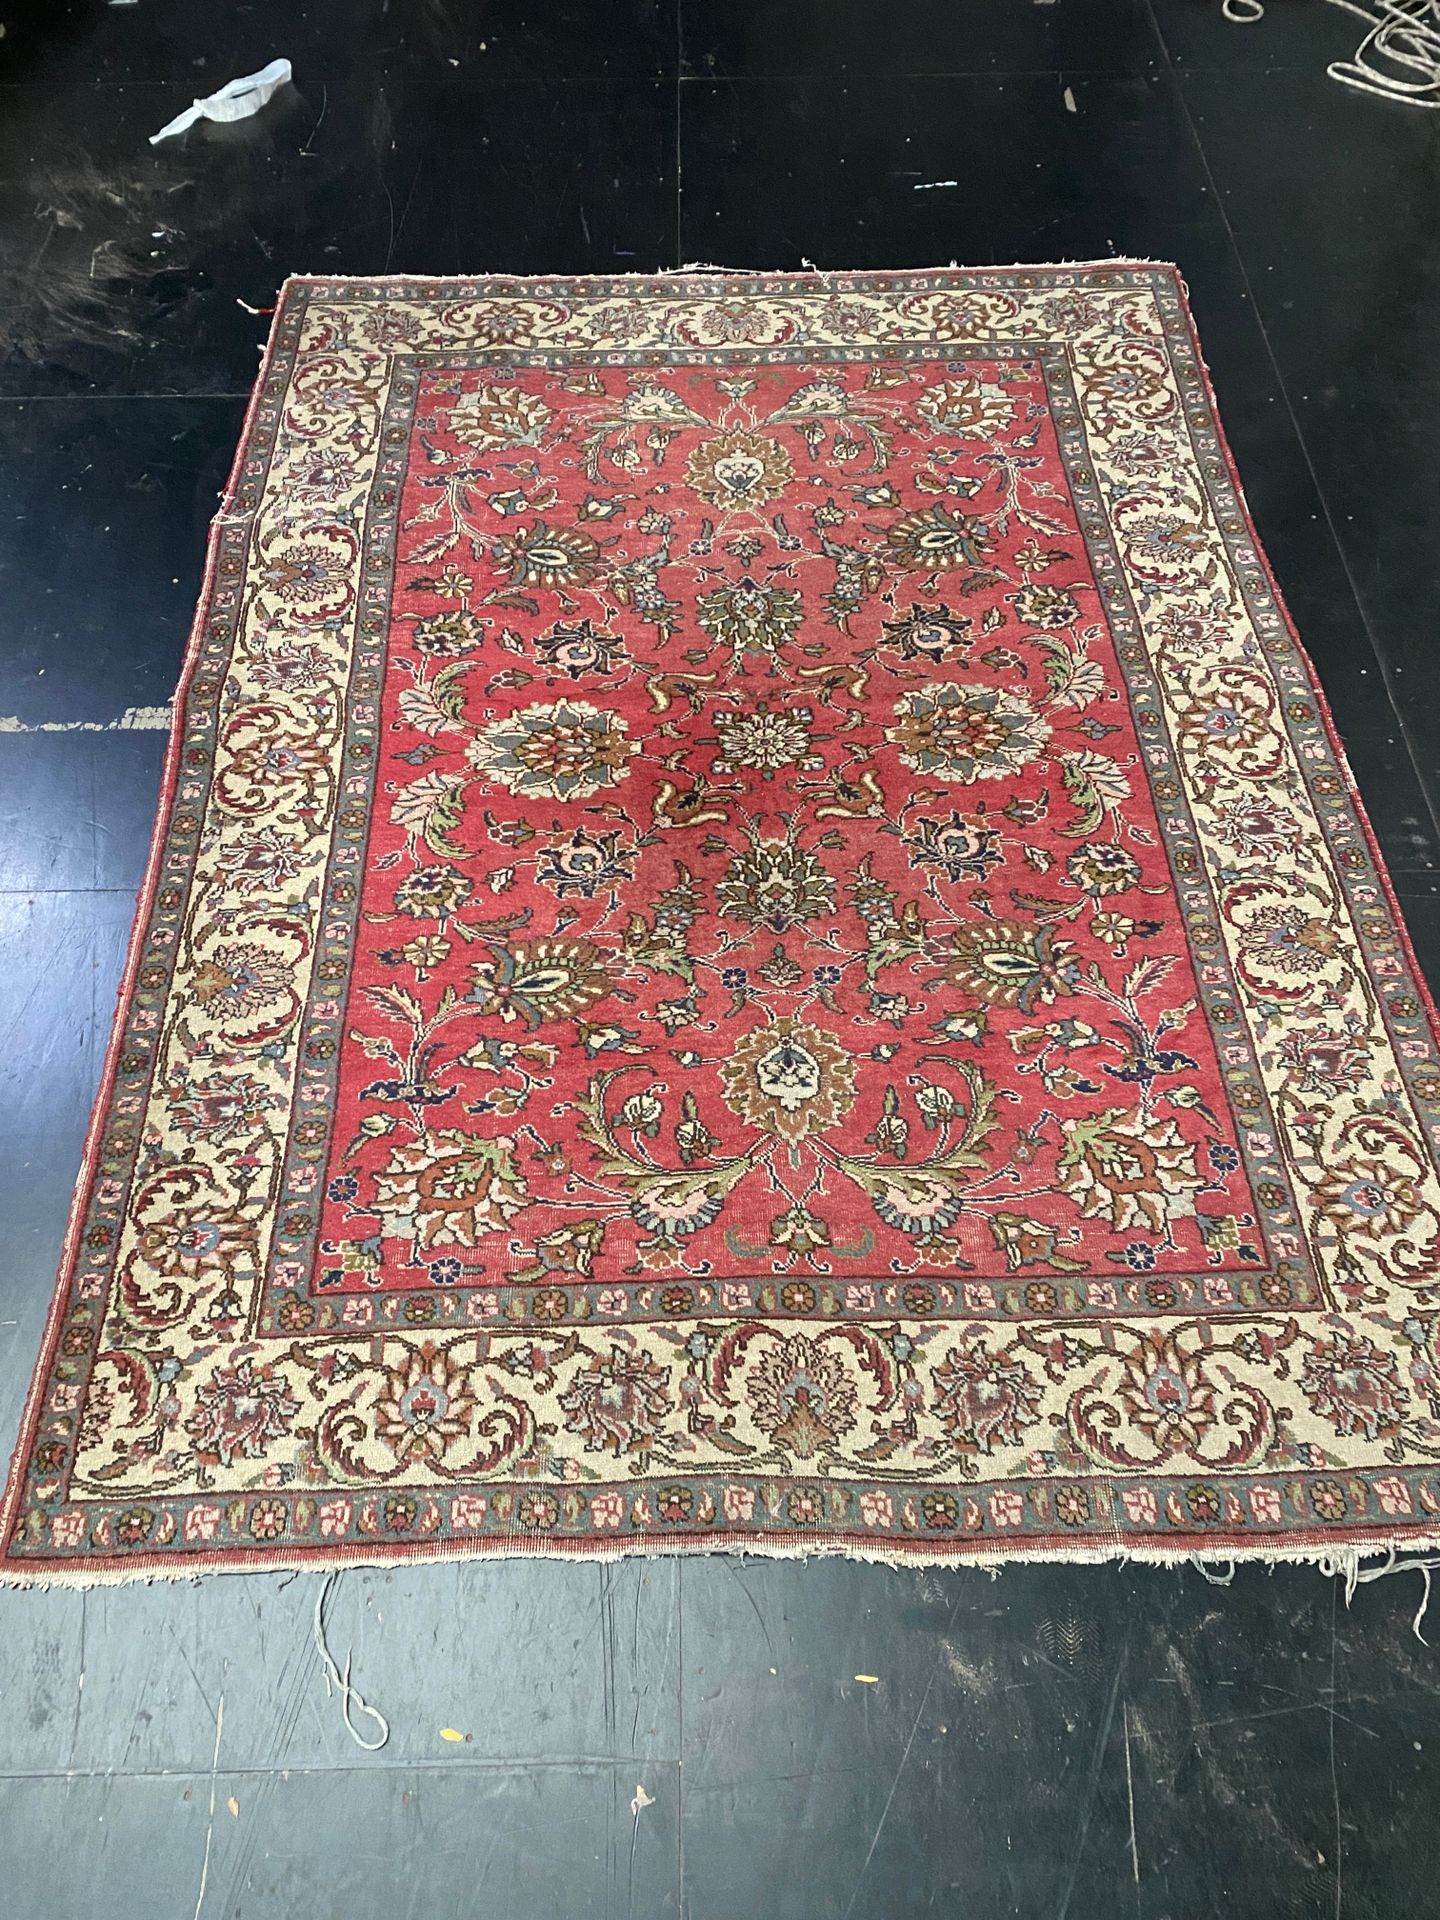 Null 东方地毯，红色背景和花朵，奶油色边框。

尺寸: 267 x 200 cm

磨损和撕裂。